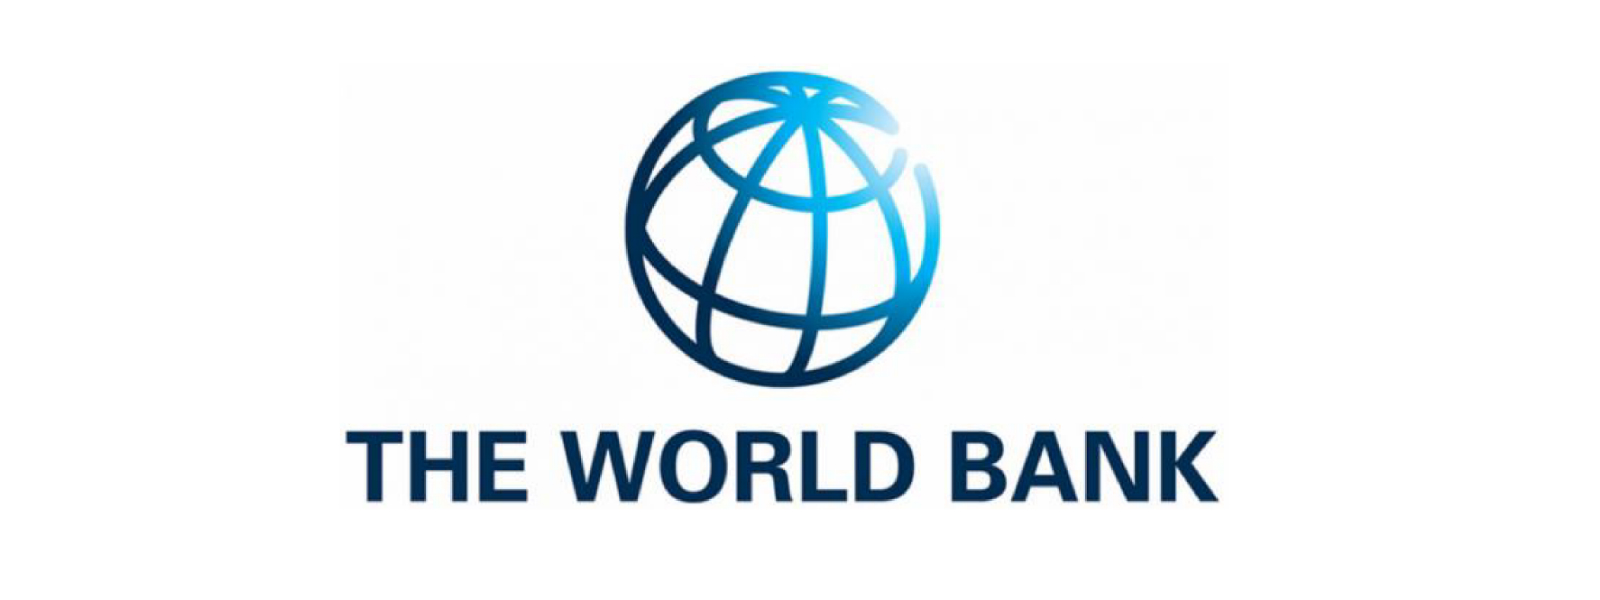 SL’s economic outlook is highly uncertain: World Bank